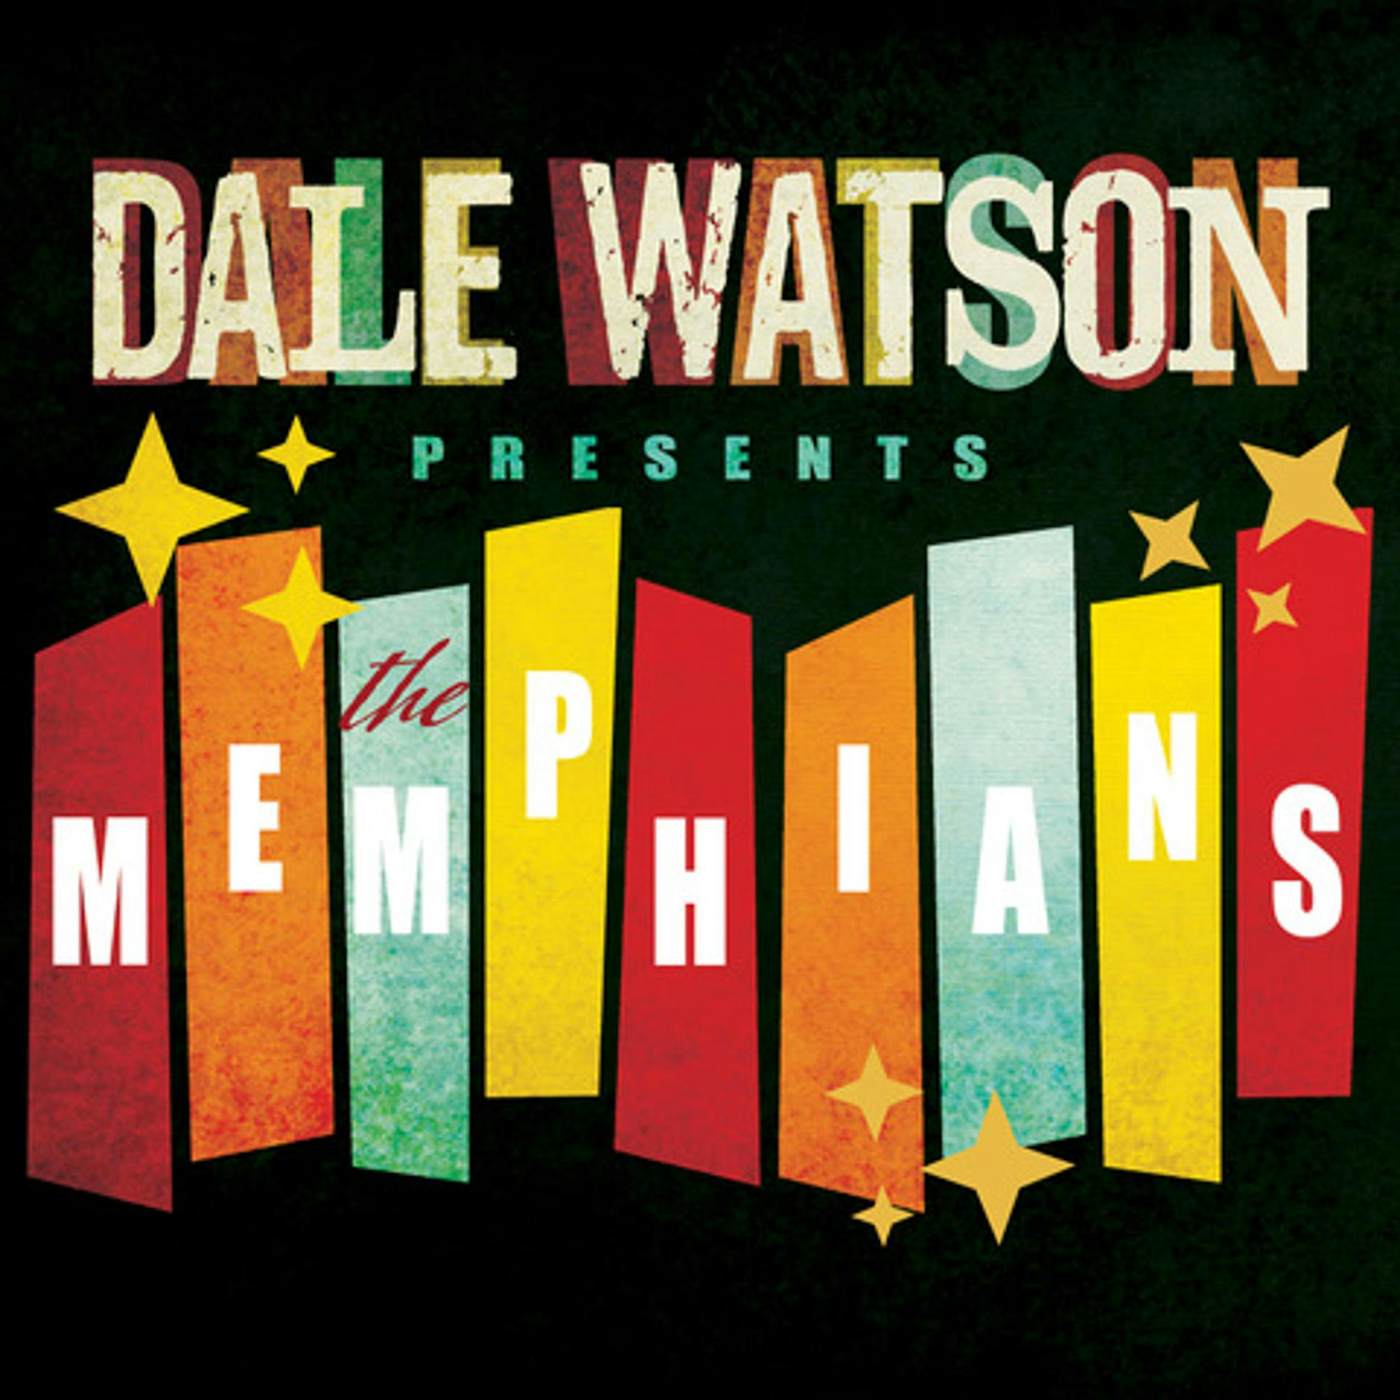 DALE WATSON PRESENTS: THE MEMPHIANS CD